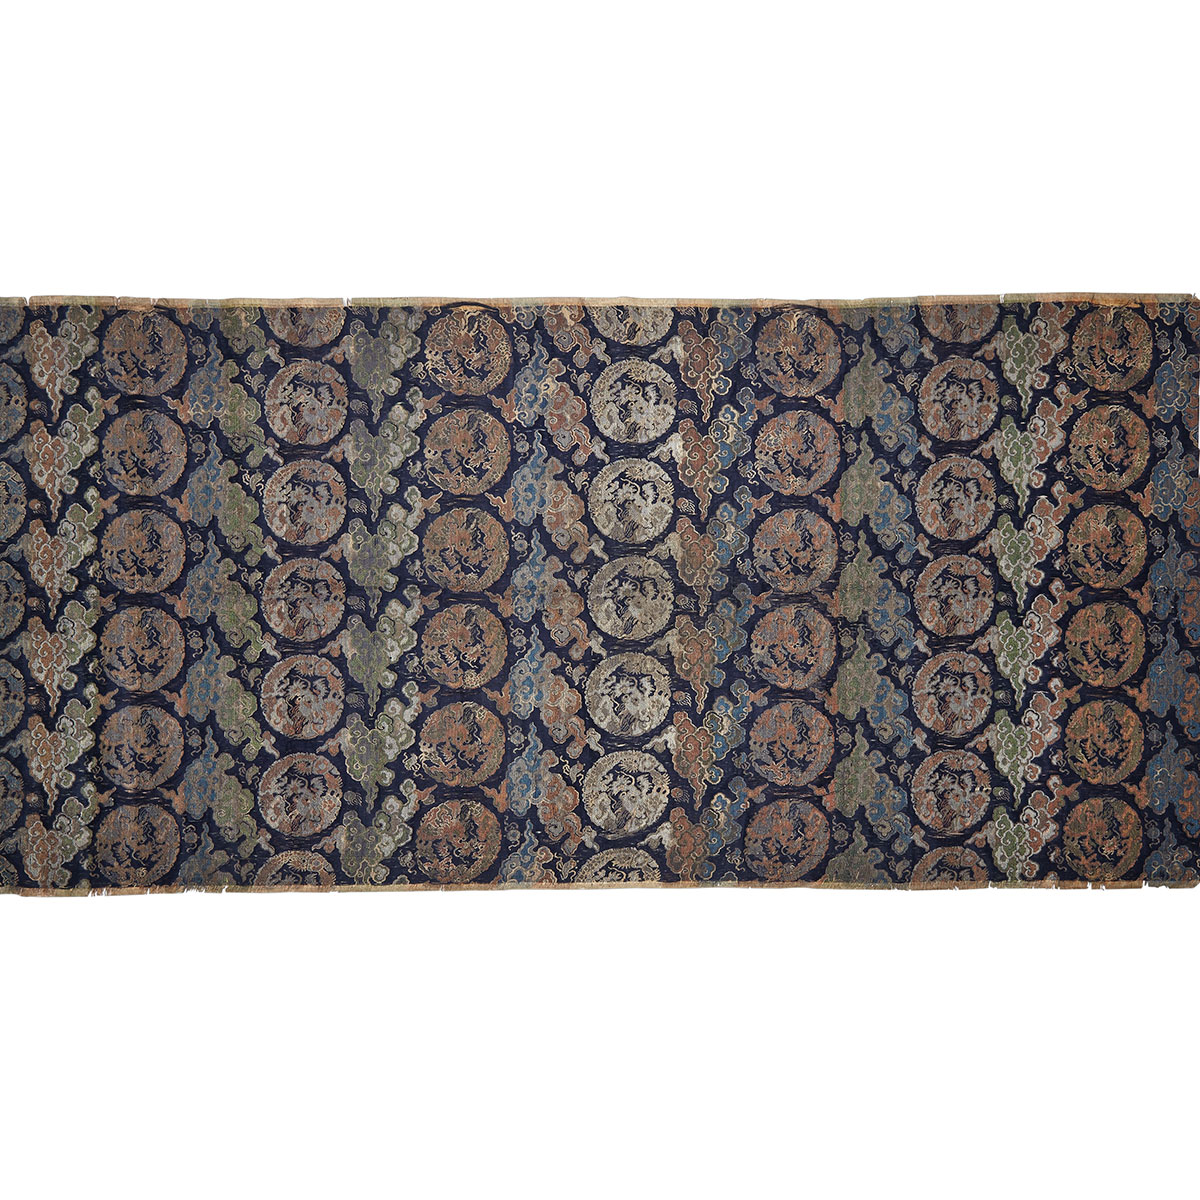 Blue Ground Silk Brocade Panel Fragment, 18th/19th Century